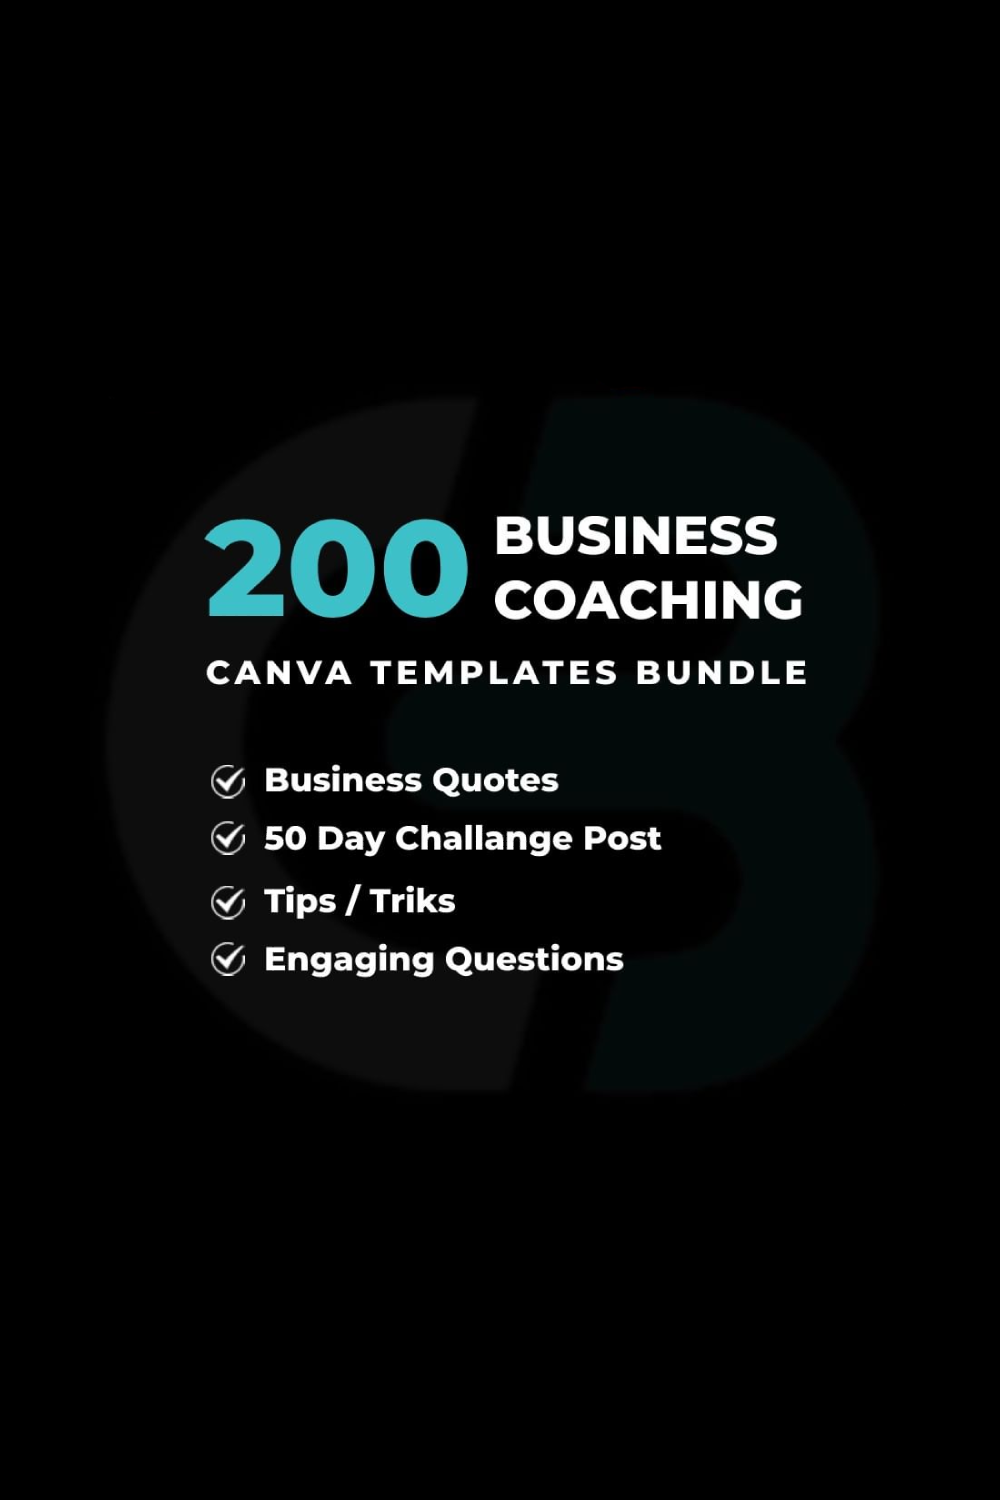 Business Coaching Canva Templates Bundle Pinterest image.